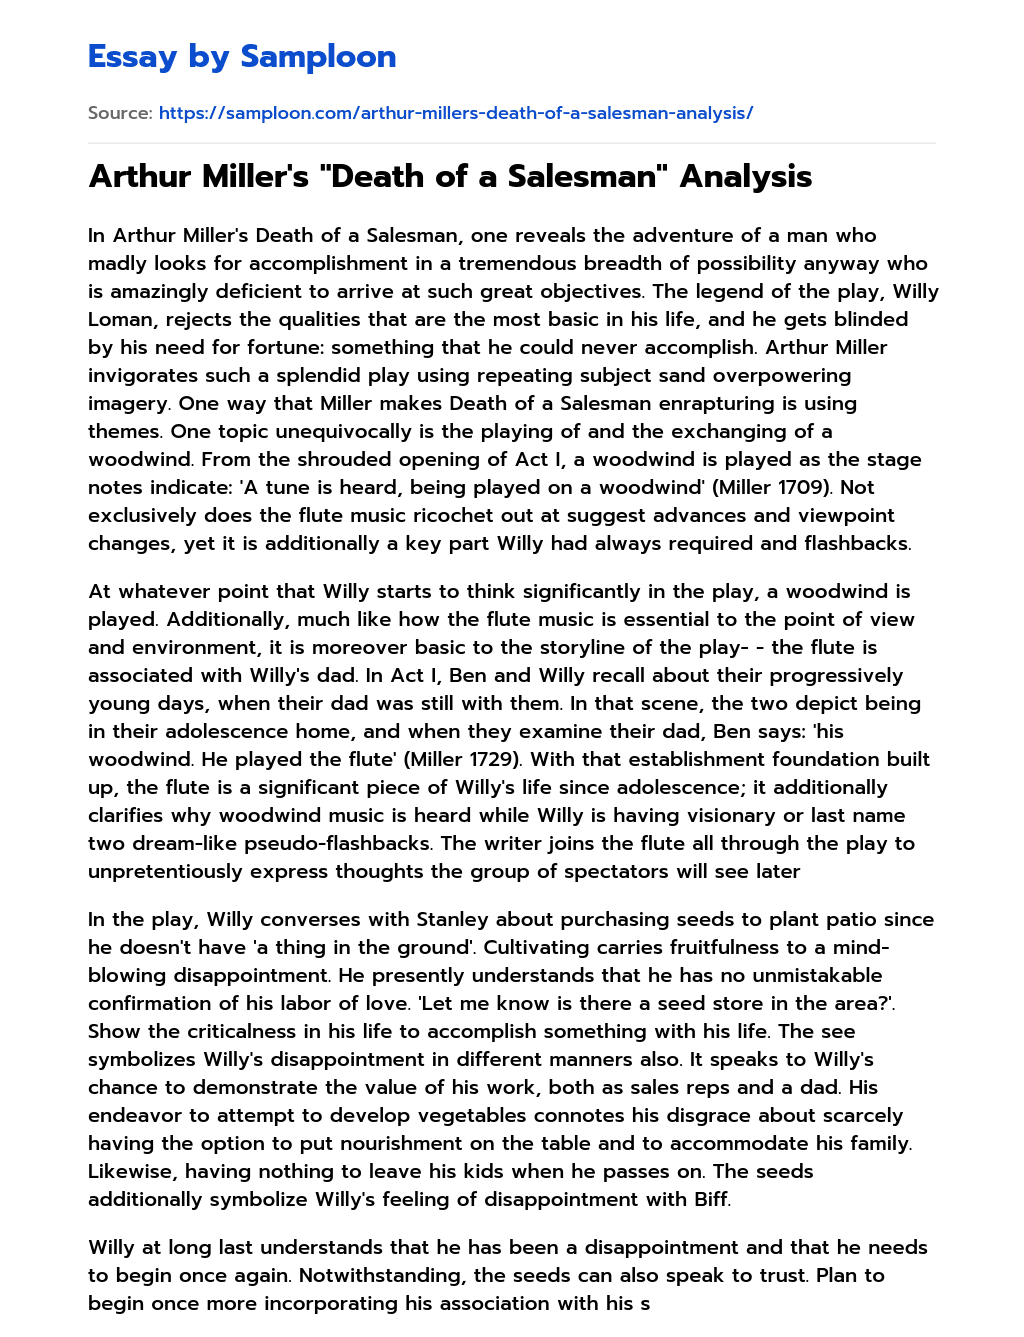 Arthur Miller’s “Death of a Salesman” Analysis essay